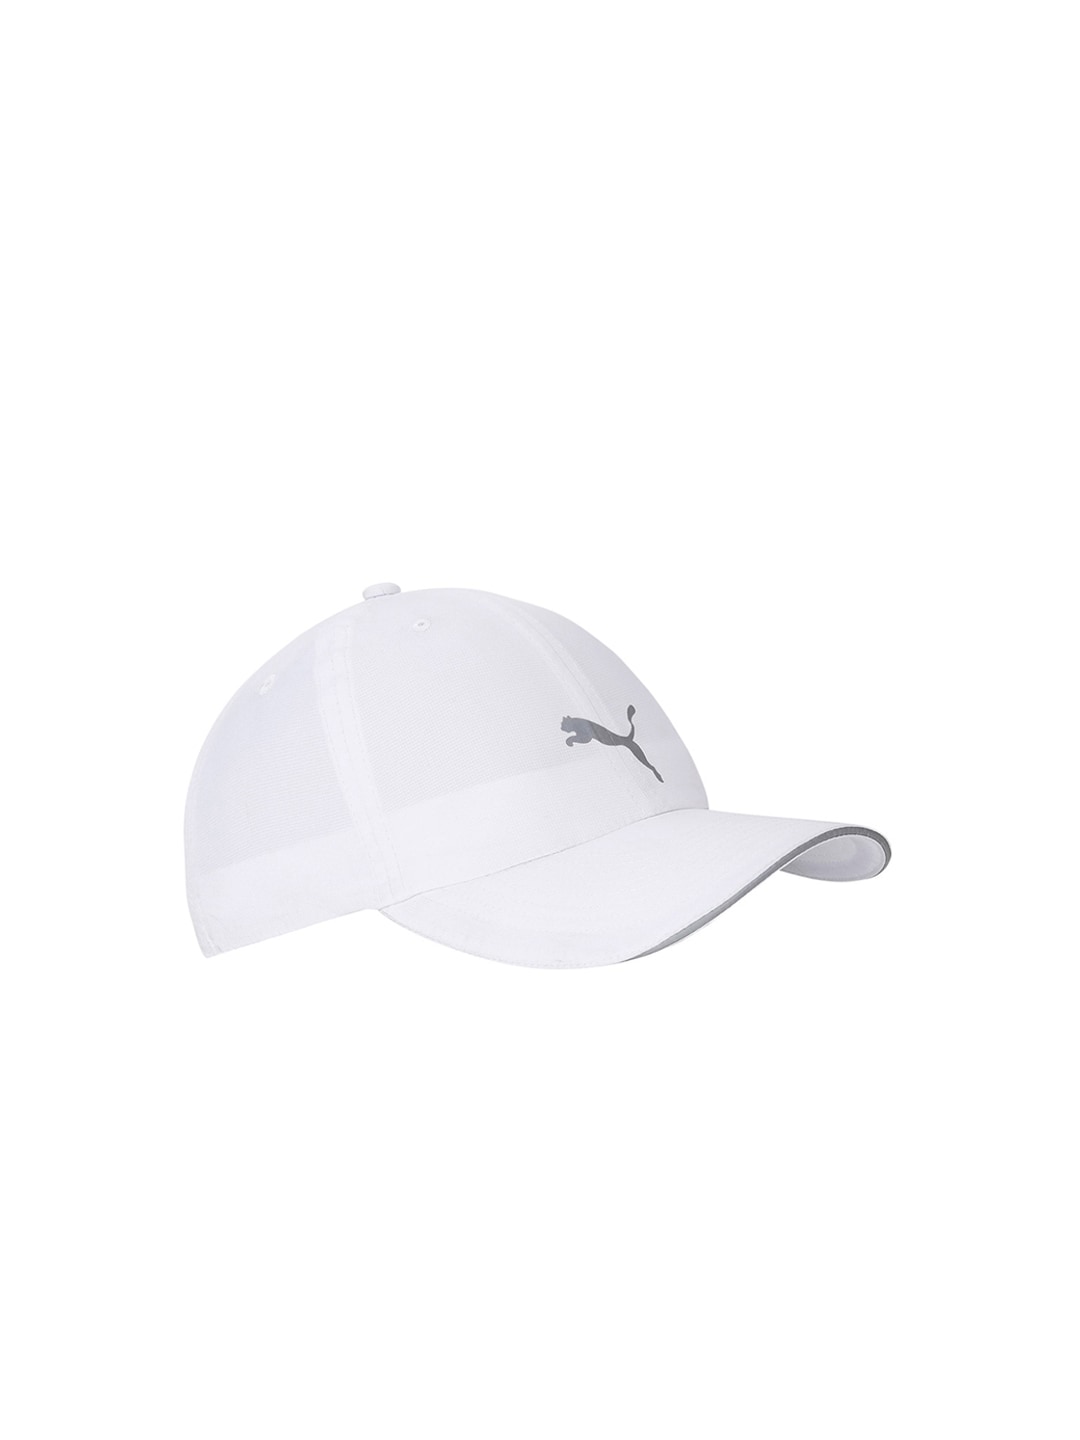 Puma Unisex White & Grey Solid Baseball Cap Price in India